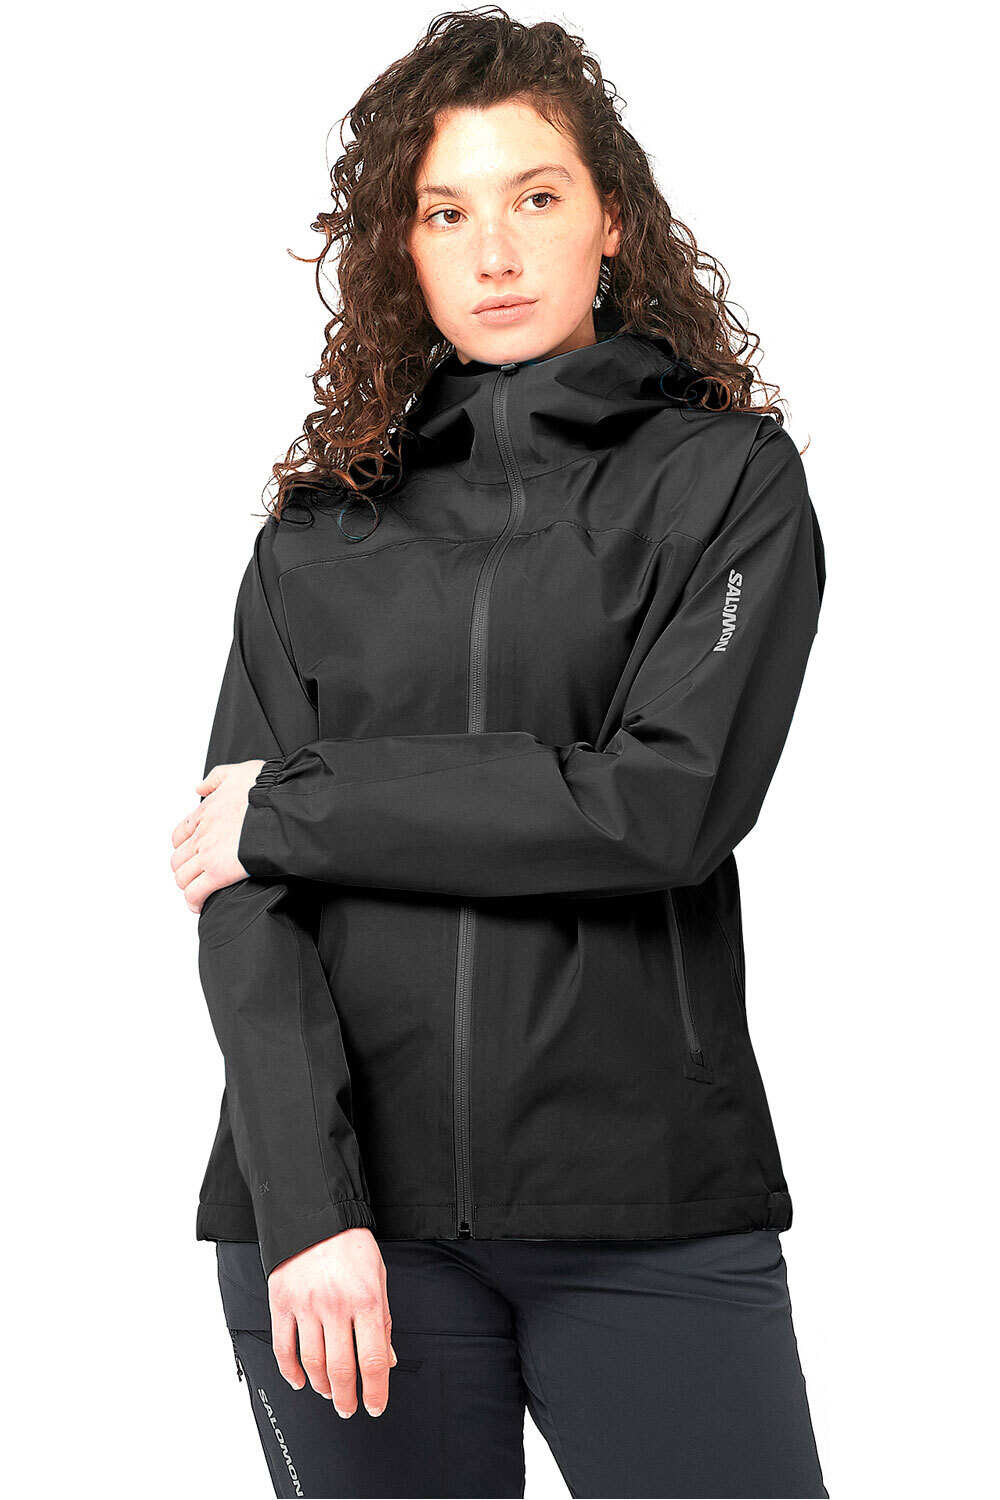 Salomon chaqueta impermeable mujer OUTLINE GTX 2.5L JKT W DEEP BLACK vista frontal